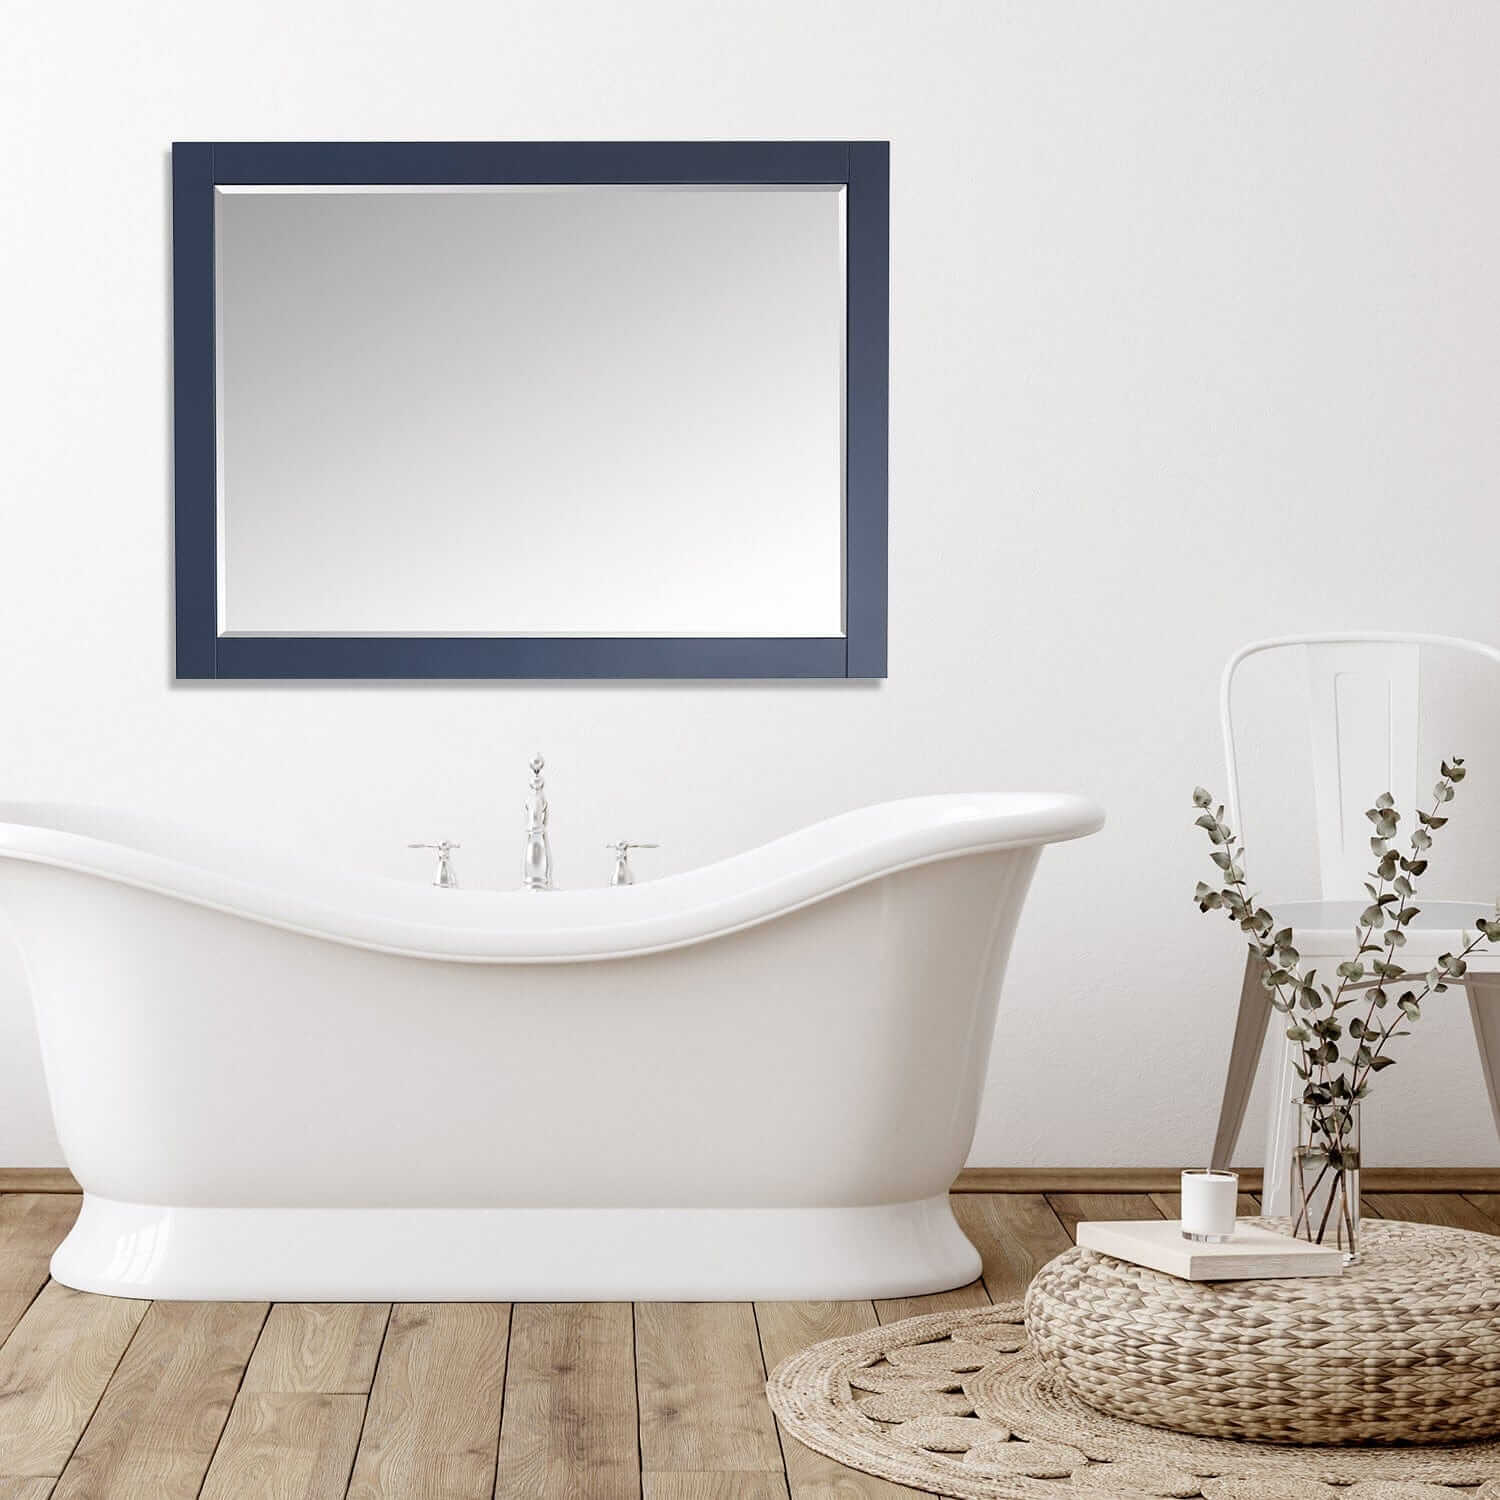 Bathroom Mirror - Altair Ivy Wood Framed - 531048-MIR-RB